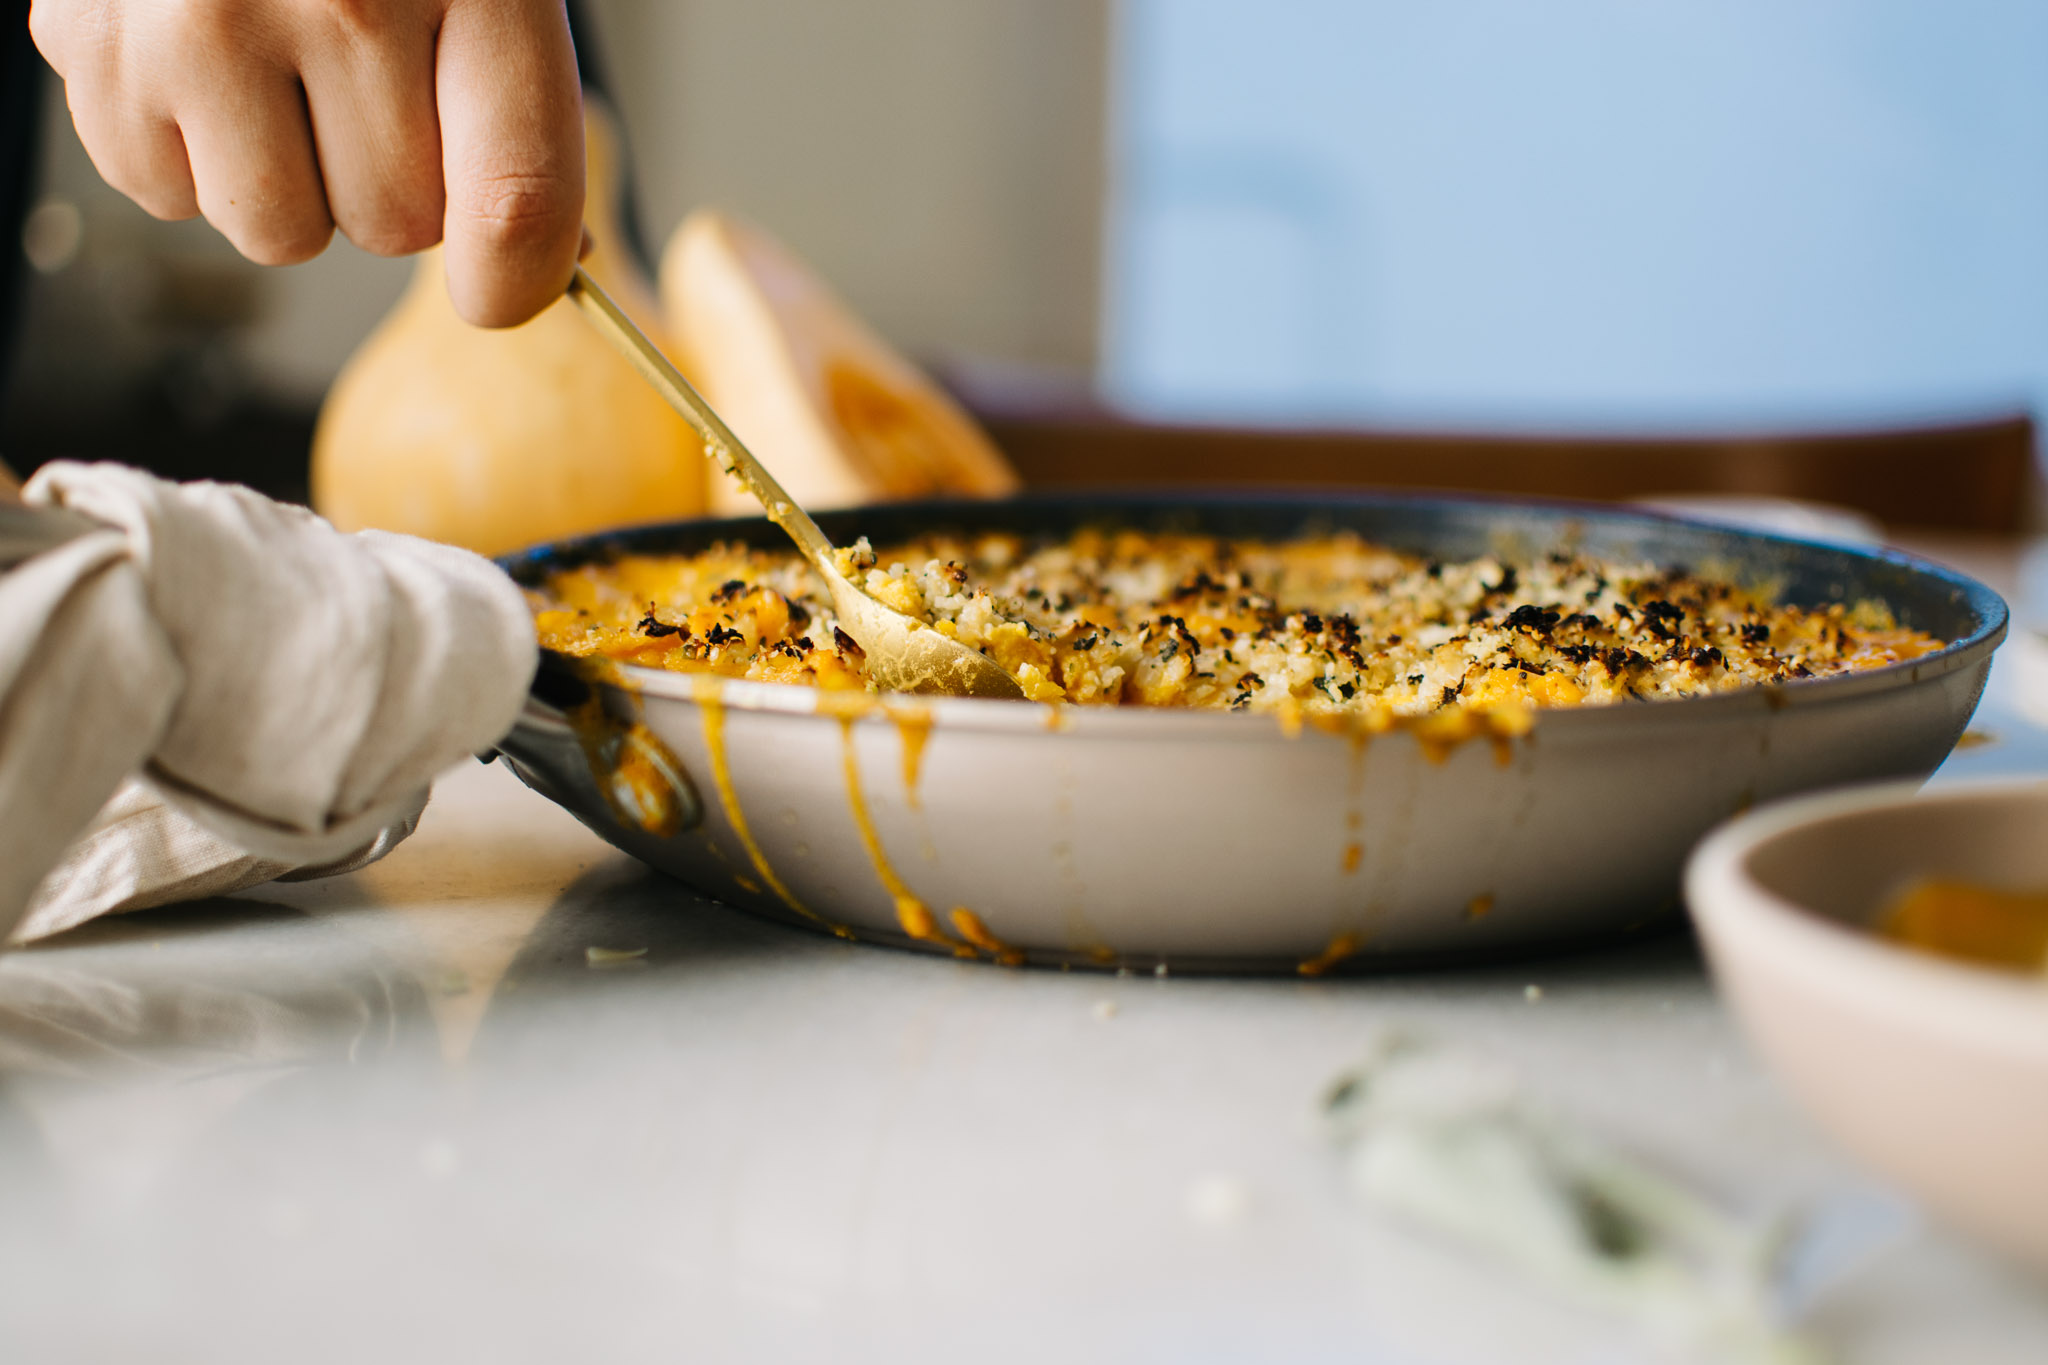 Cheesy Butternut Squash with Sage Cauliflower Breadcrumbs